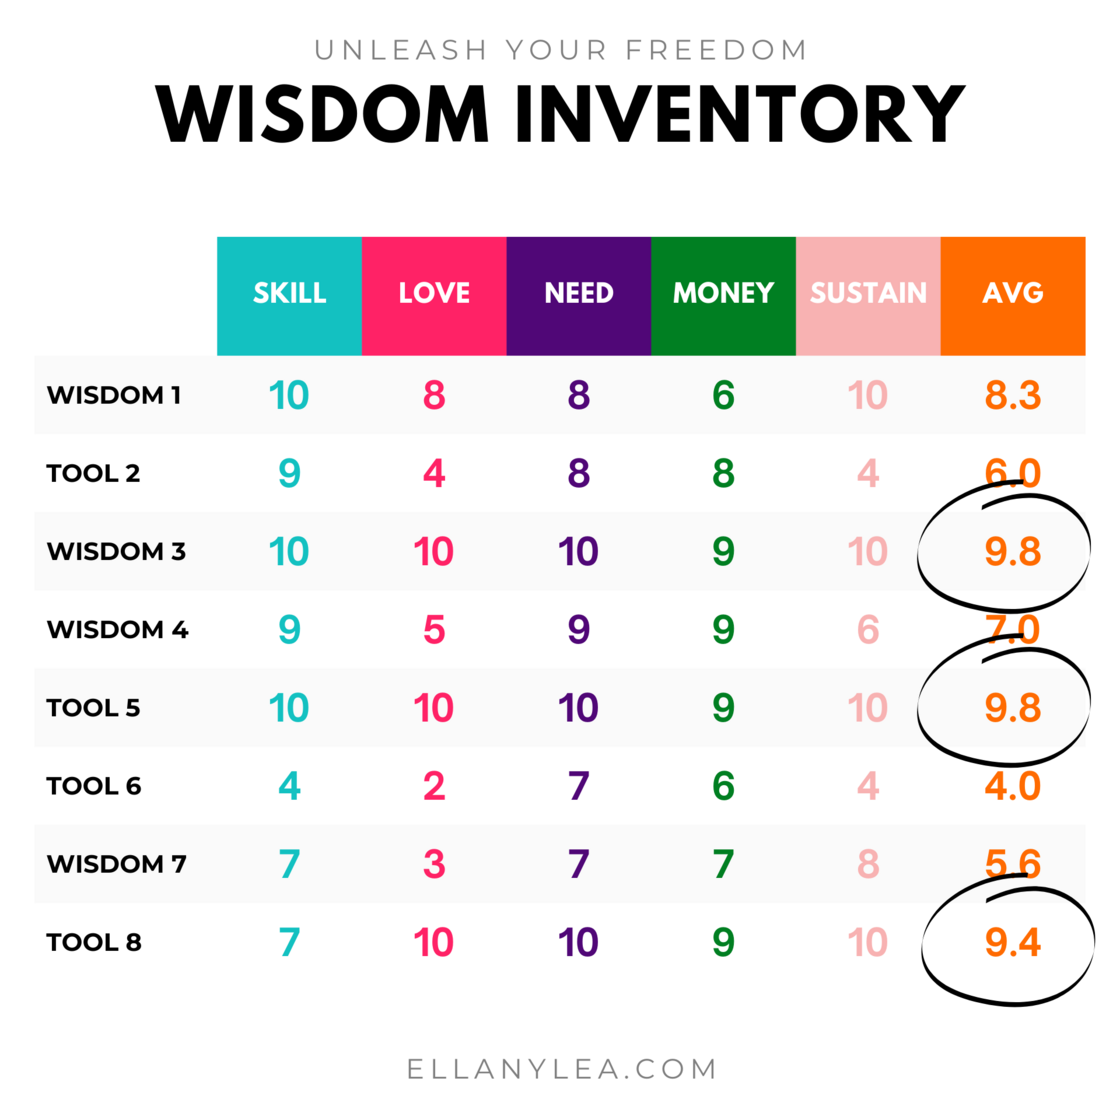 UYM Wisdom Inventory - 5 Freedom Factors